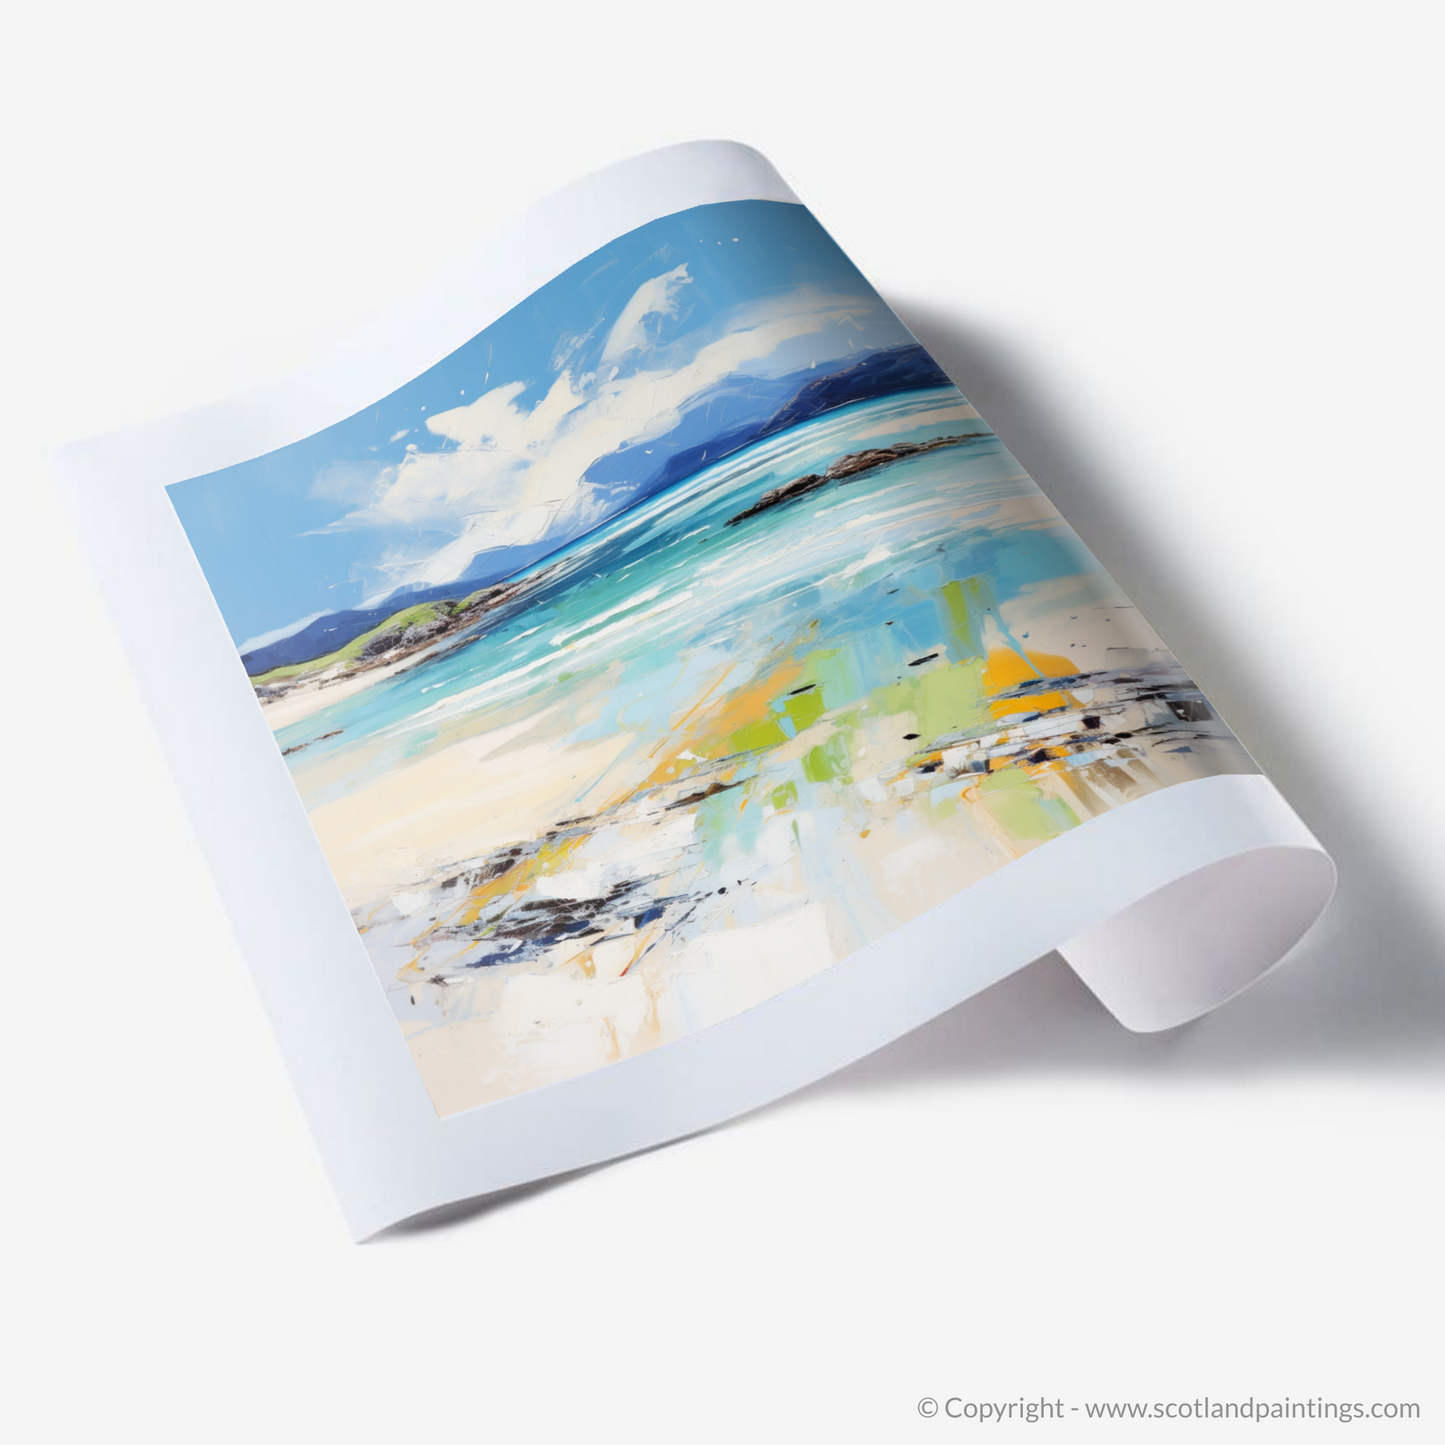 Painting and Art Print of Seilebost Beach, Isle of Harris in summer. Summer Serenade at Seilebost Beach.